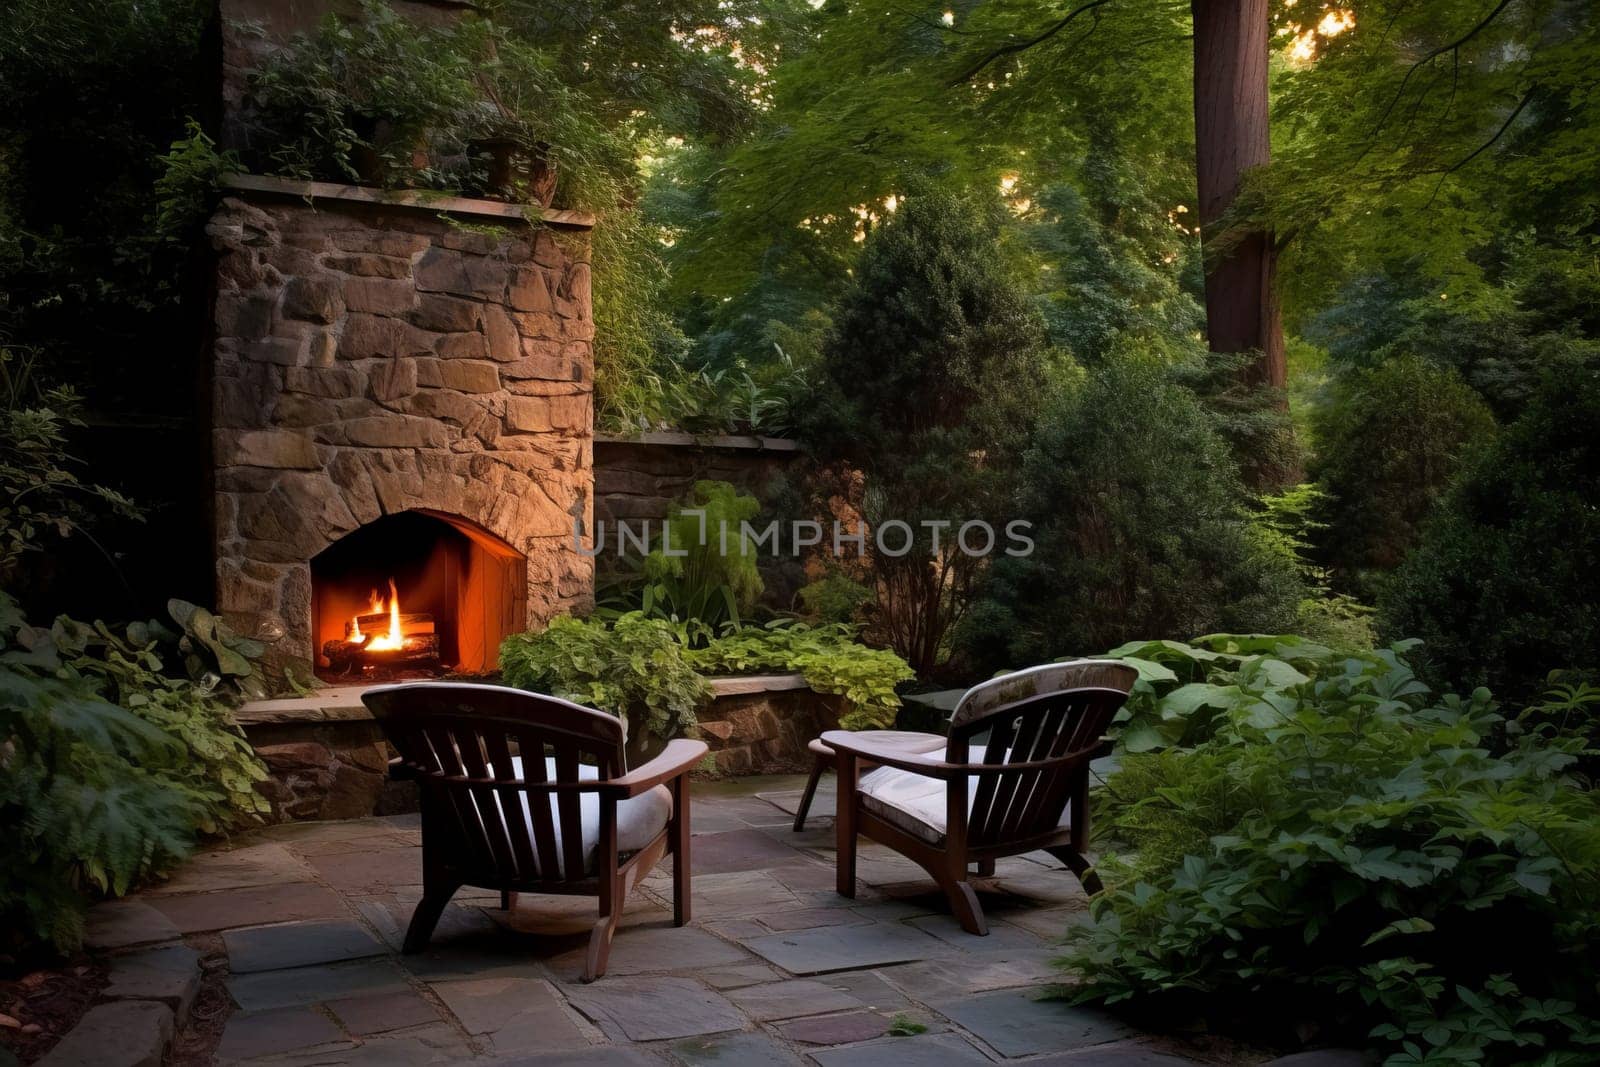 Backyard fireplace chairs relax. Generate Ai by ylivdesign